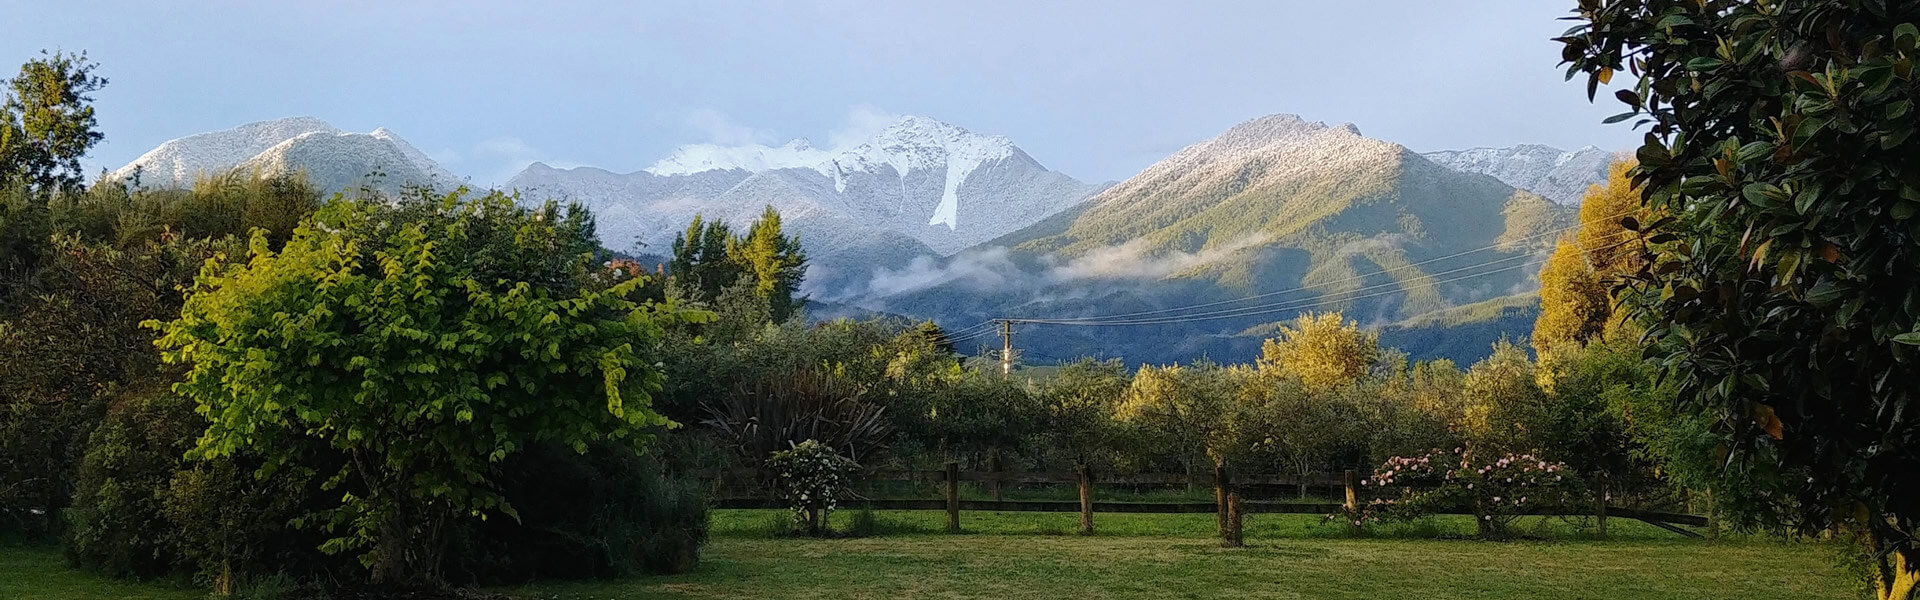 View Of Mountain Ranges Near Jeymar Soap And Body In Blenheim Marlborough NZ